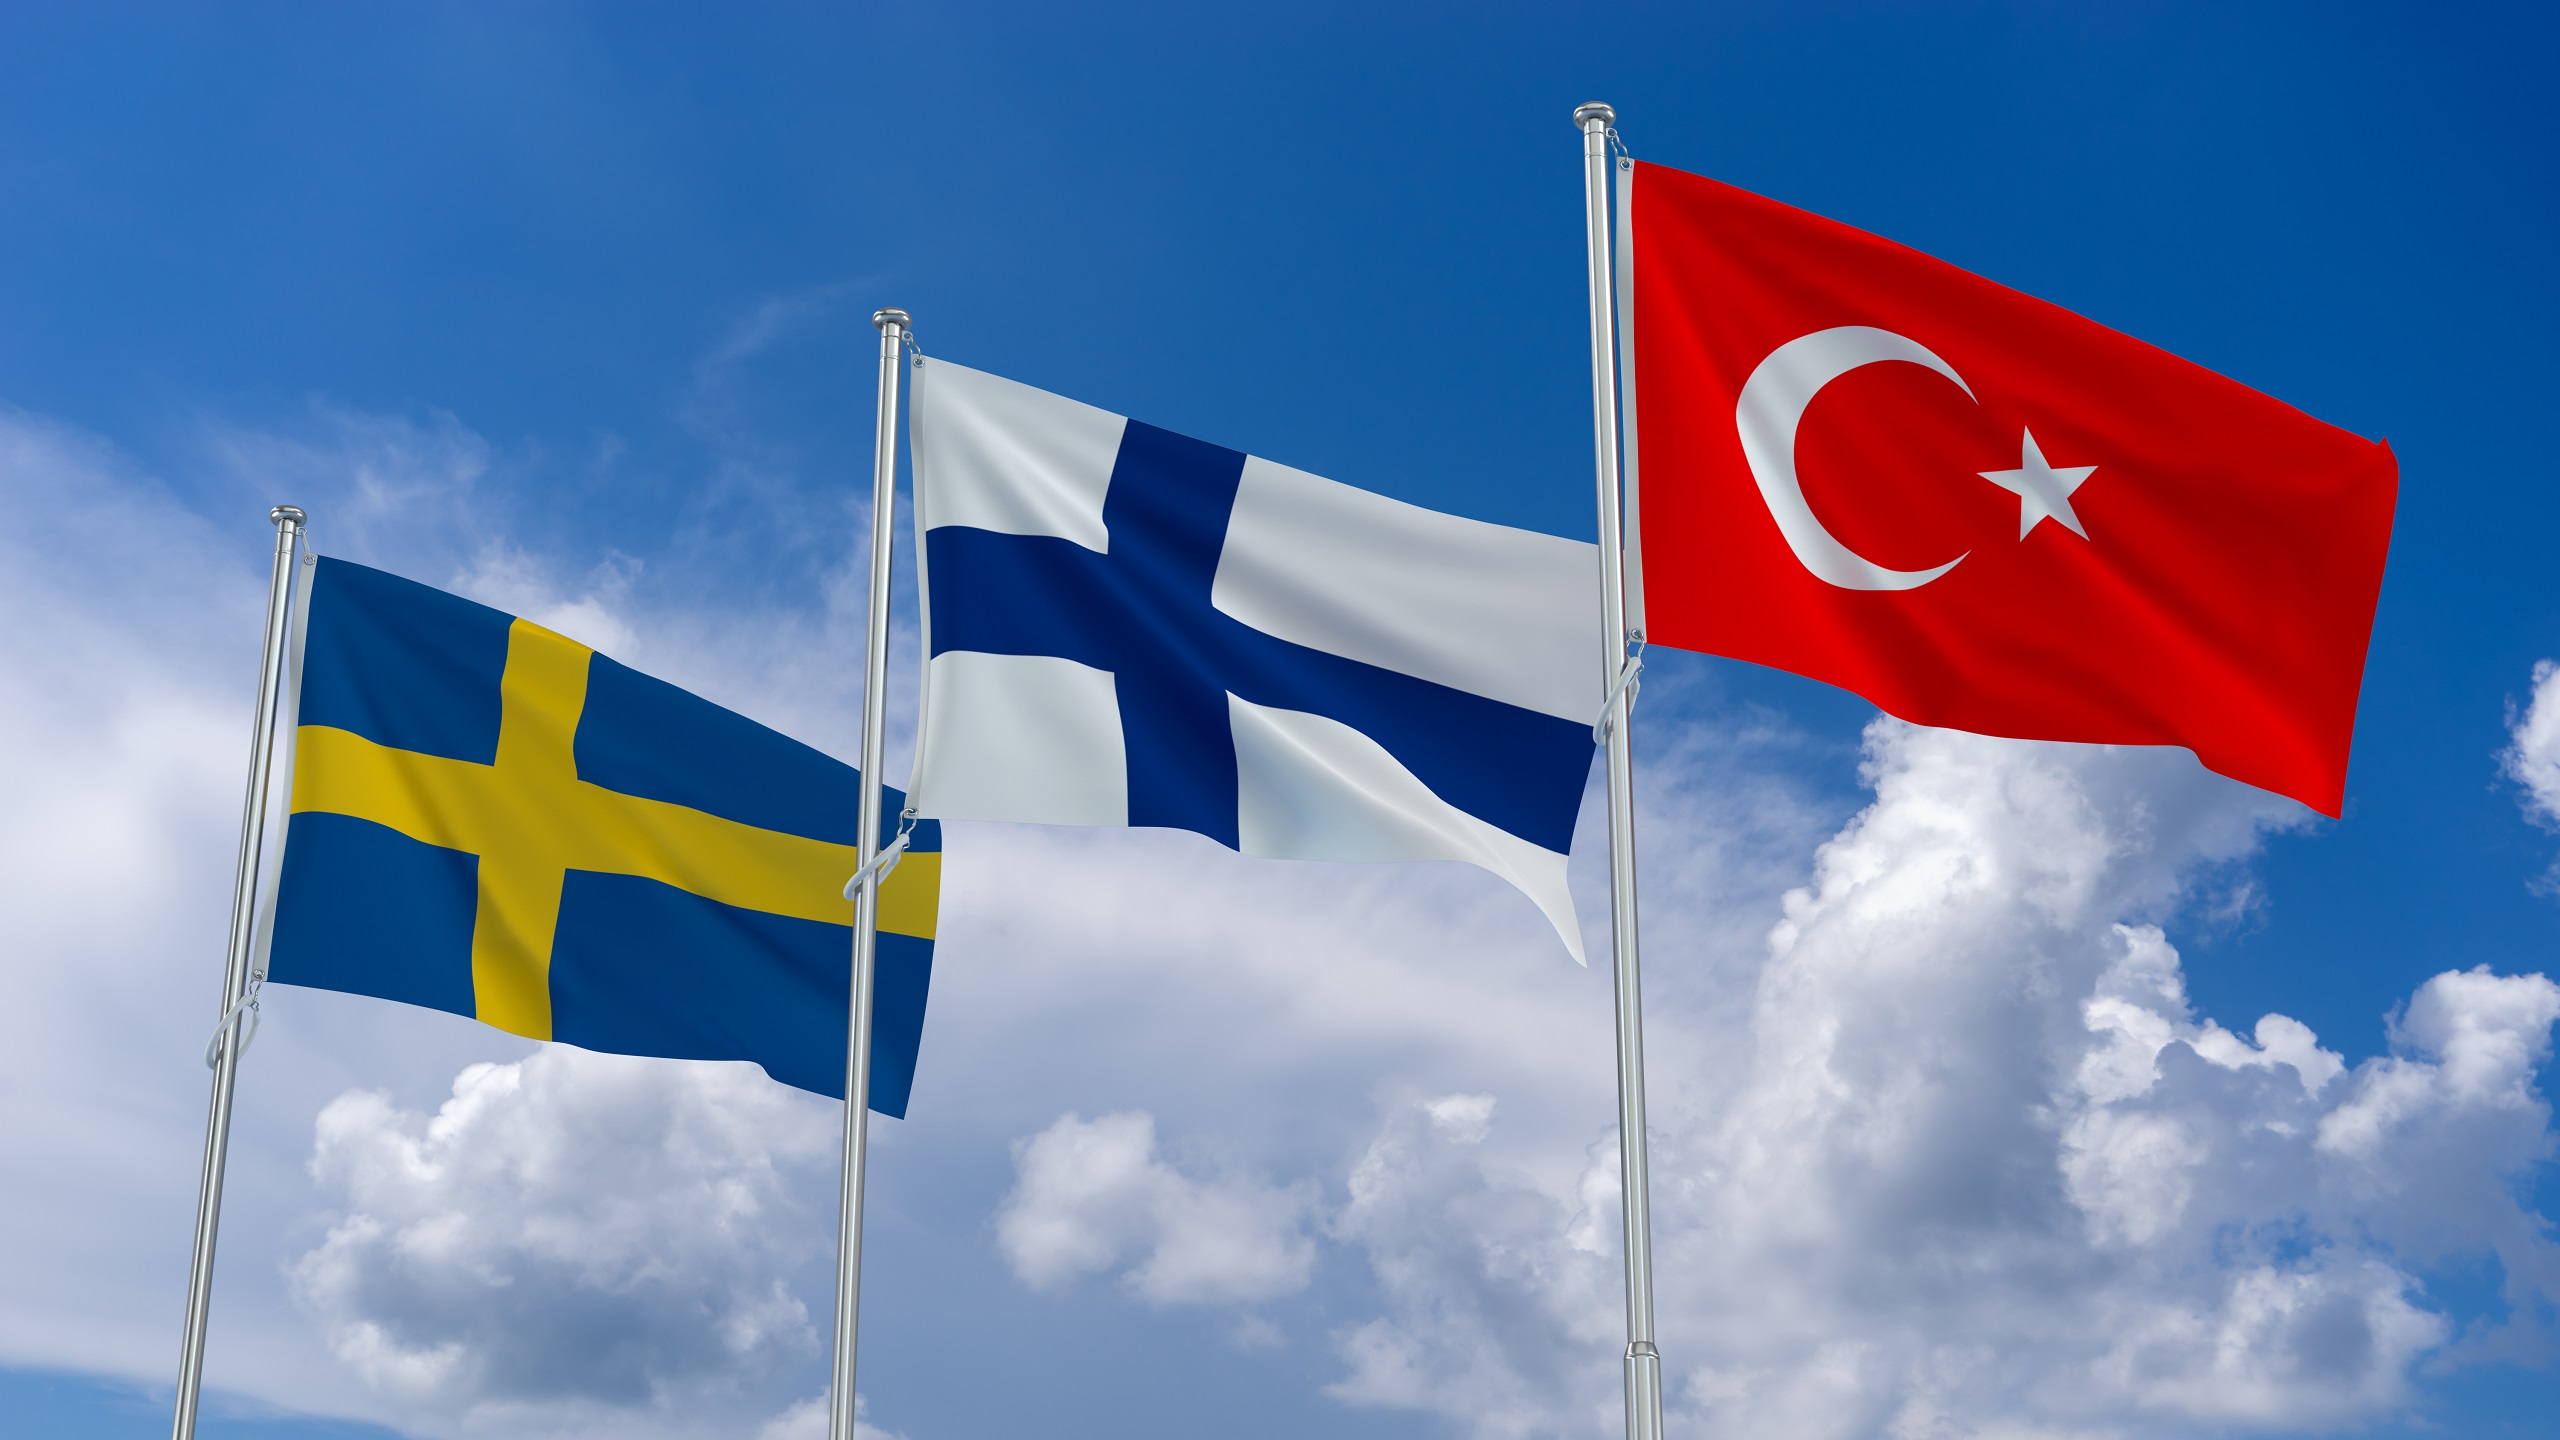 Finnish, Swedish Leaders To Discuss NATO Bid With Turkish President